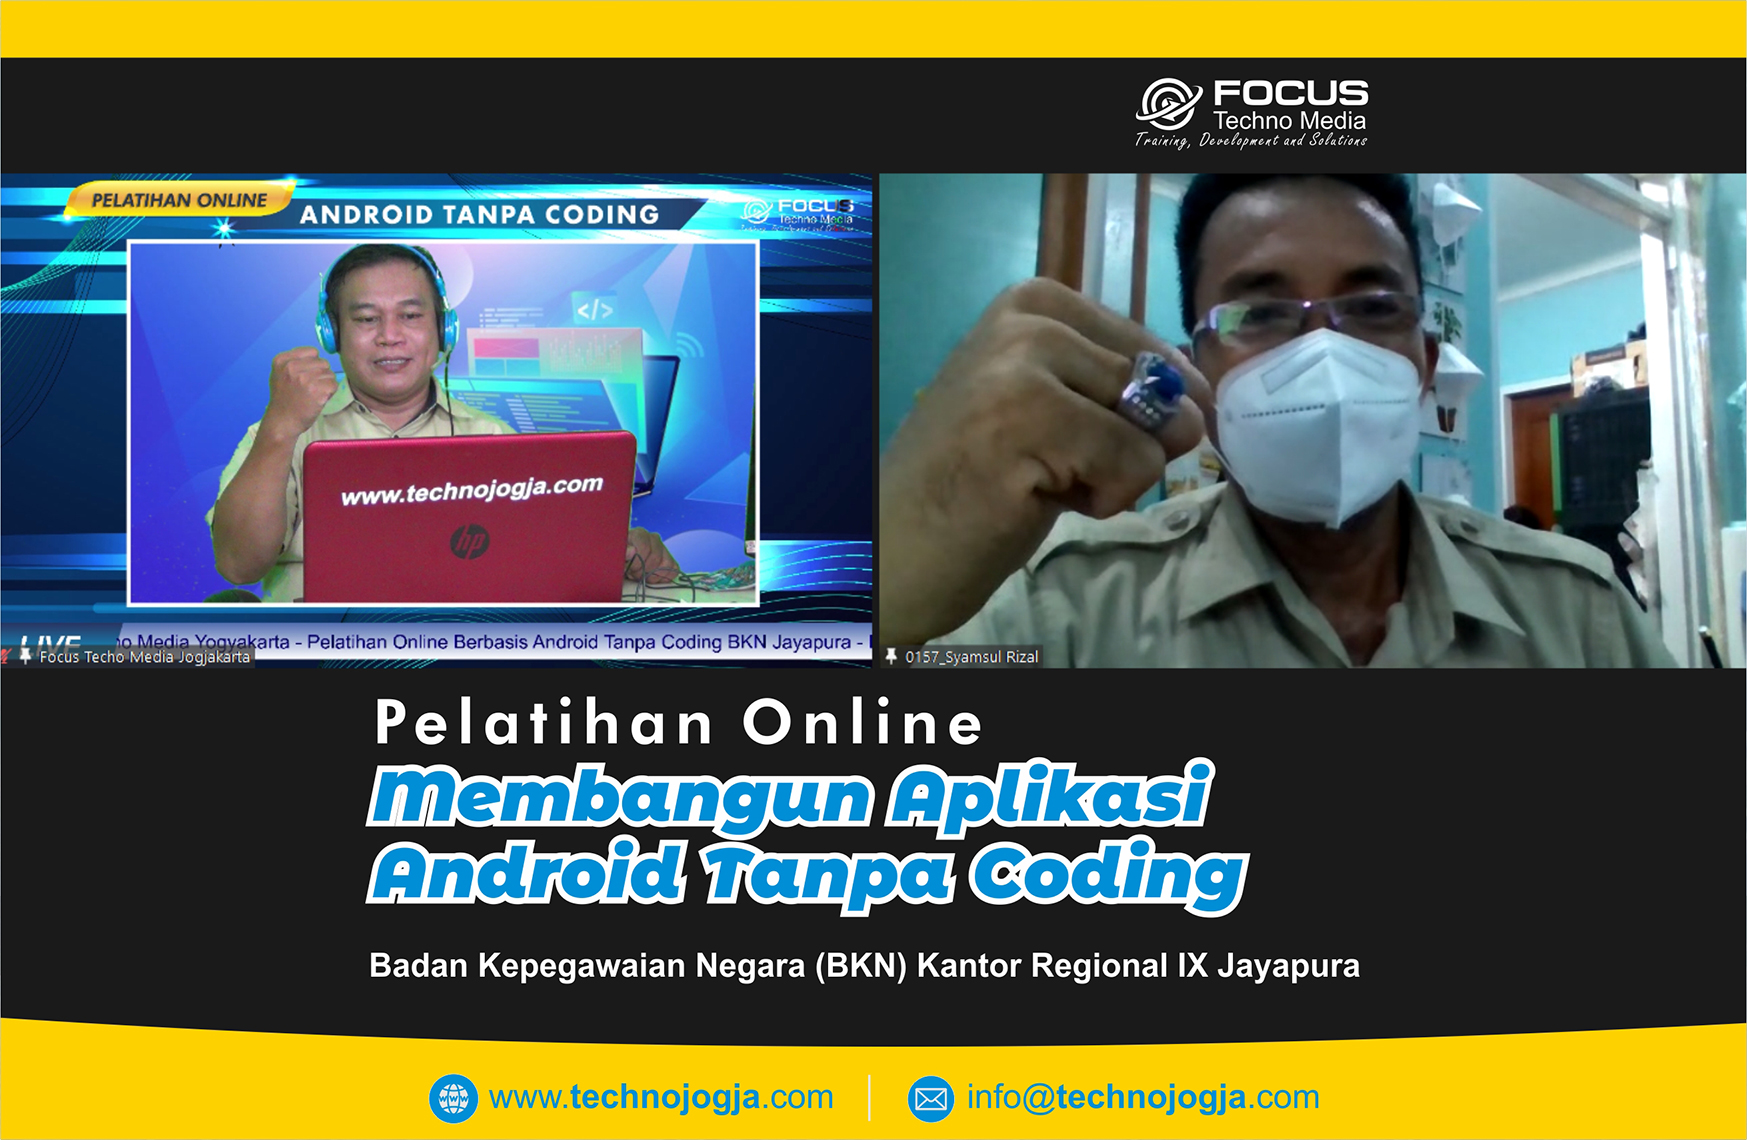 Pelatihan Online Android Tanpa Coding